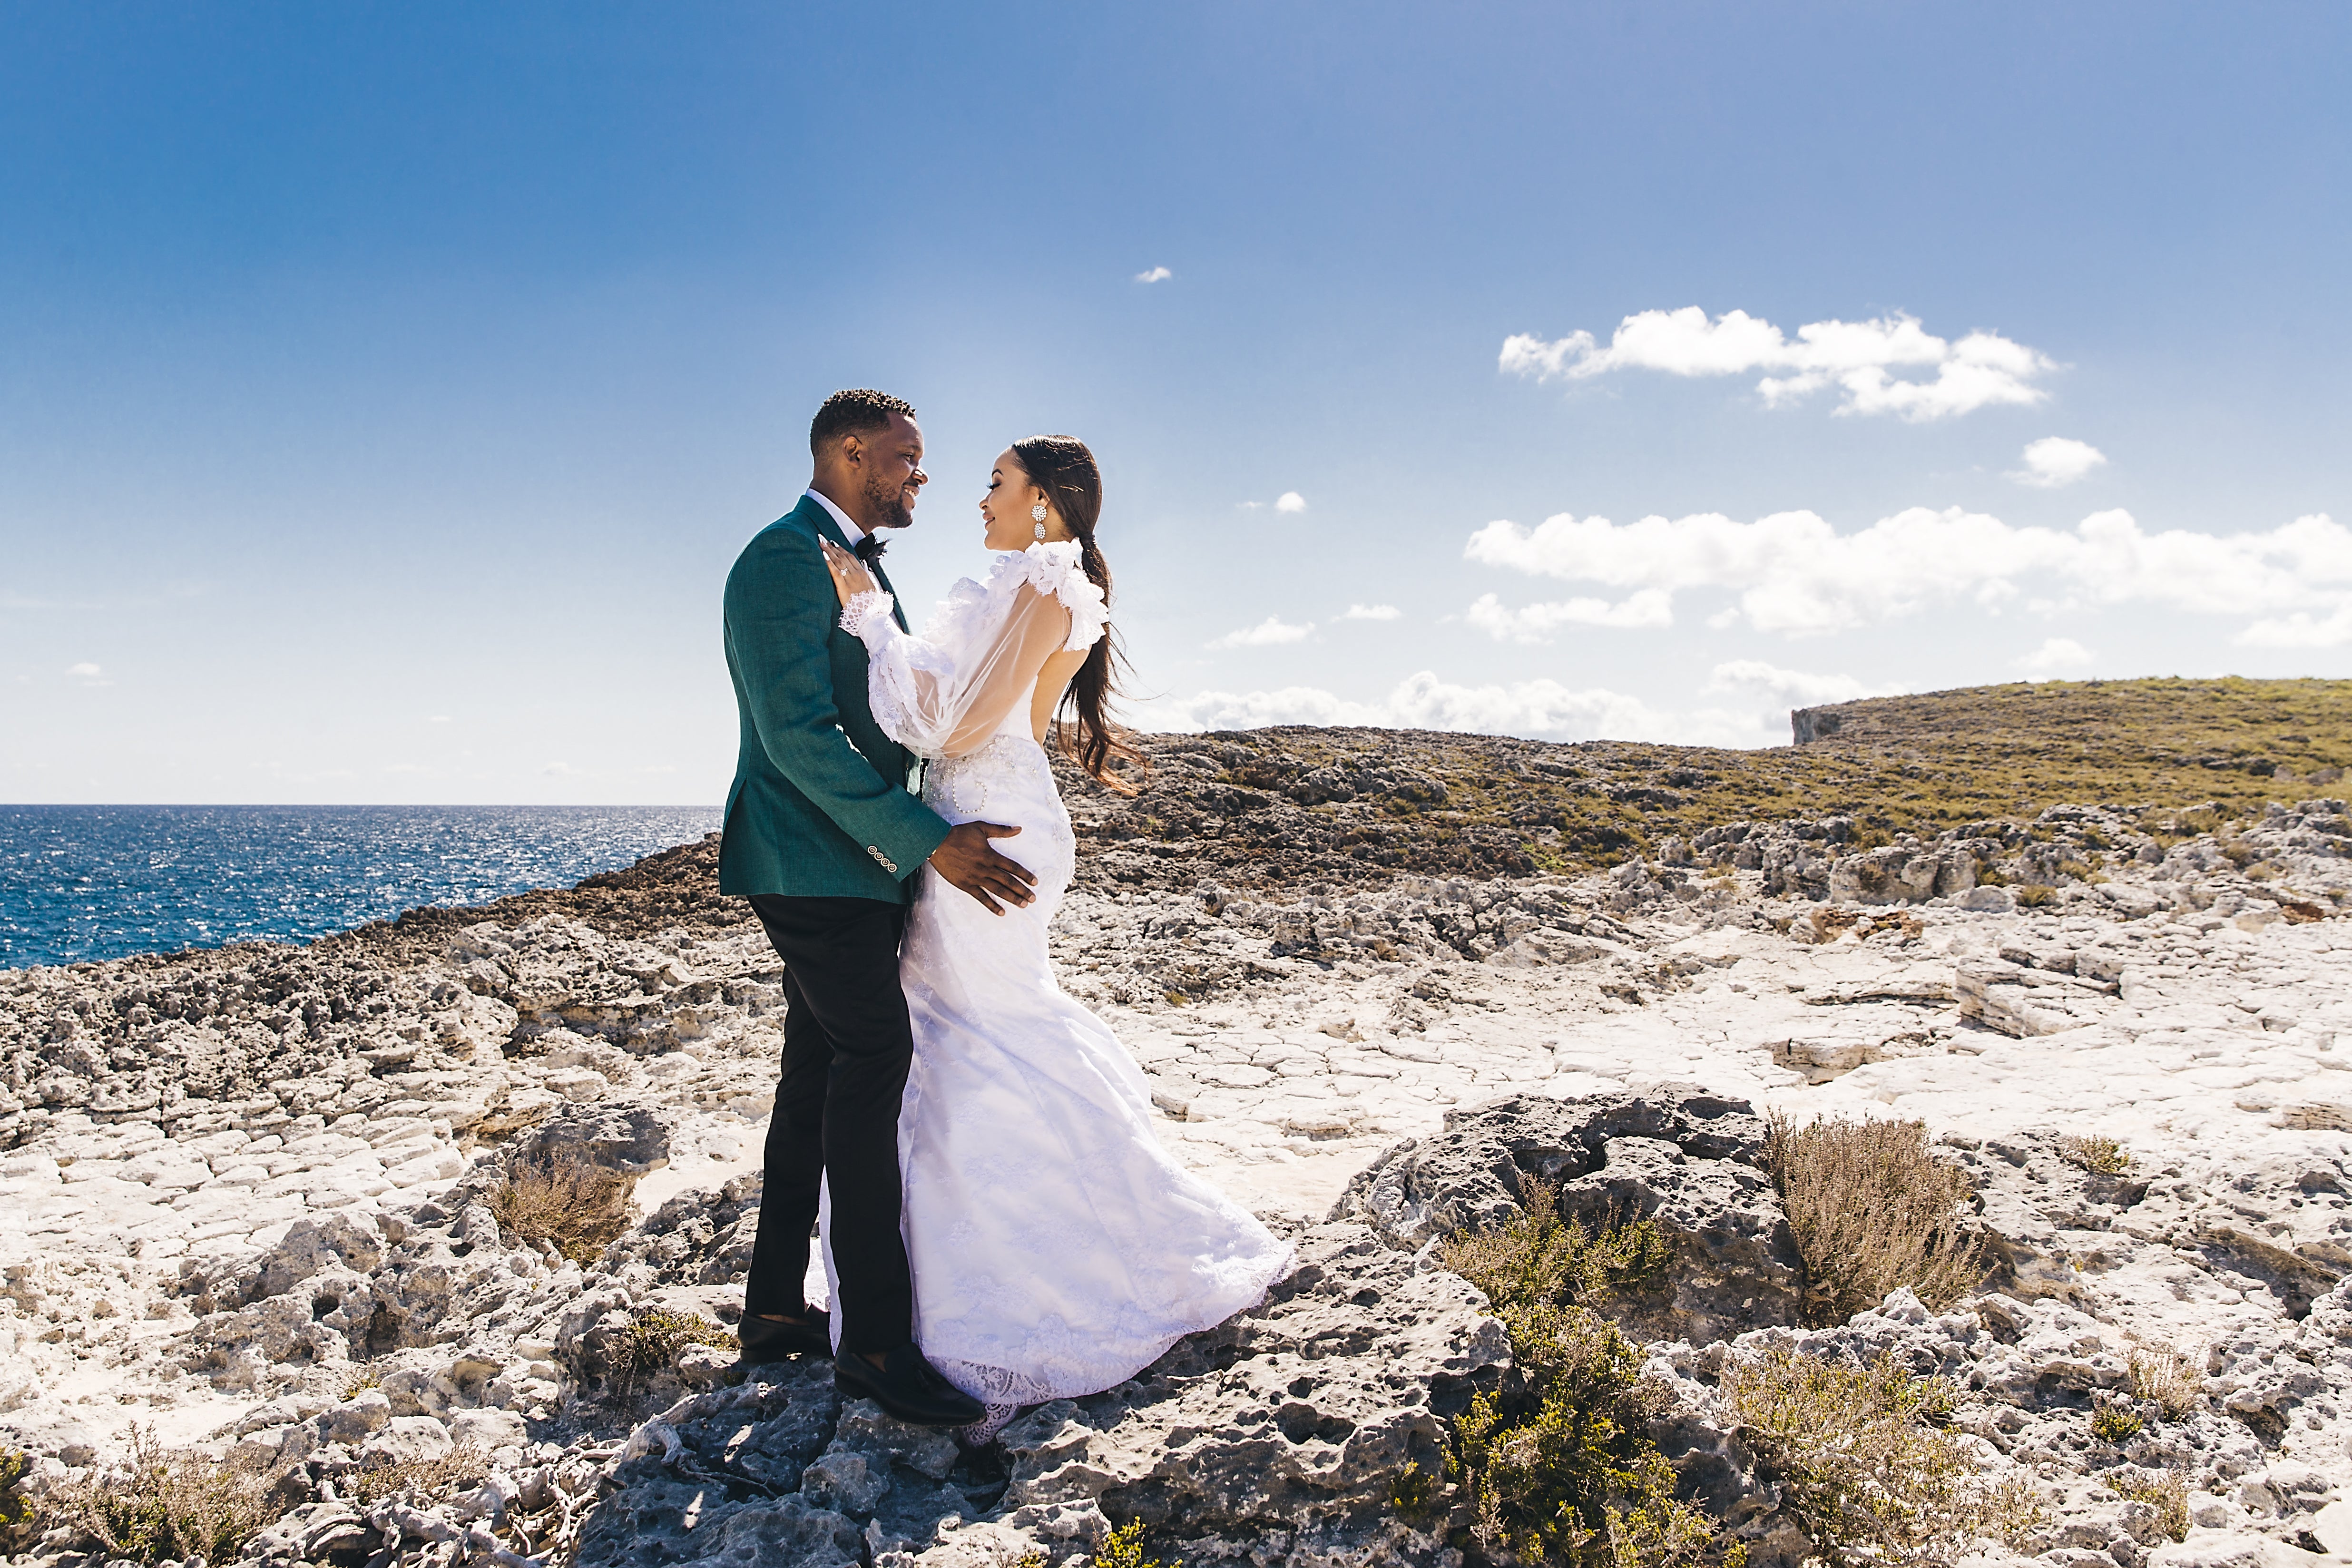 Bridal Bliss: Ian And Zemi's Island Chic Bahamas Wedding Will Take Your Breath Away
